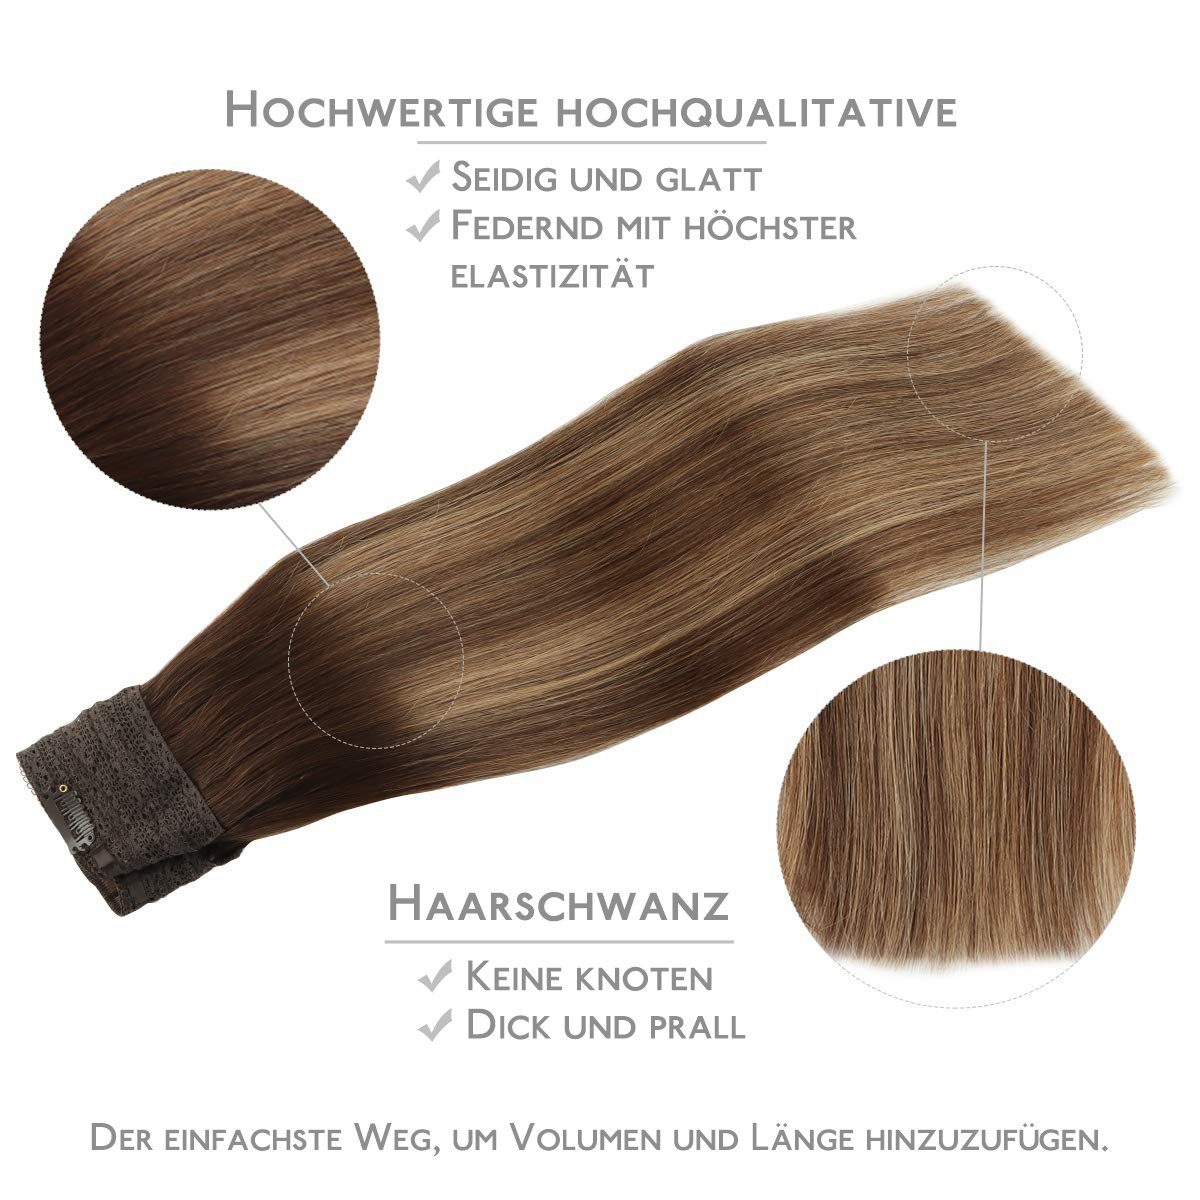 Halo Haar bis Blonde Schokolade Wennalife Karamell Haar, Extensions, Braun Echthaar-Extension